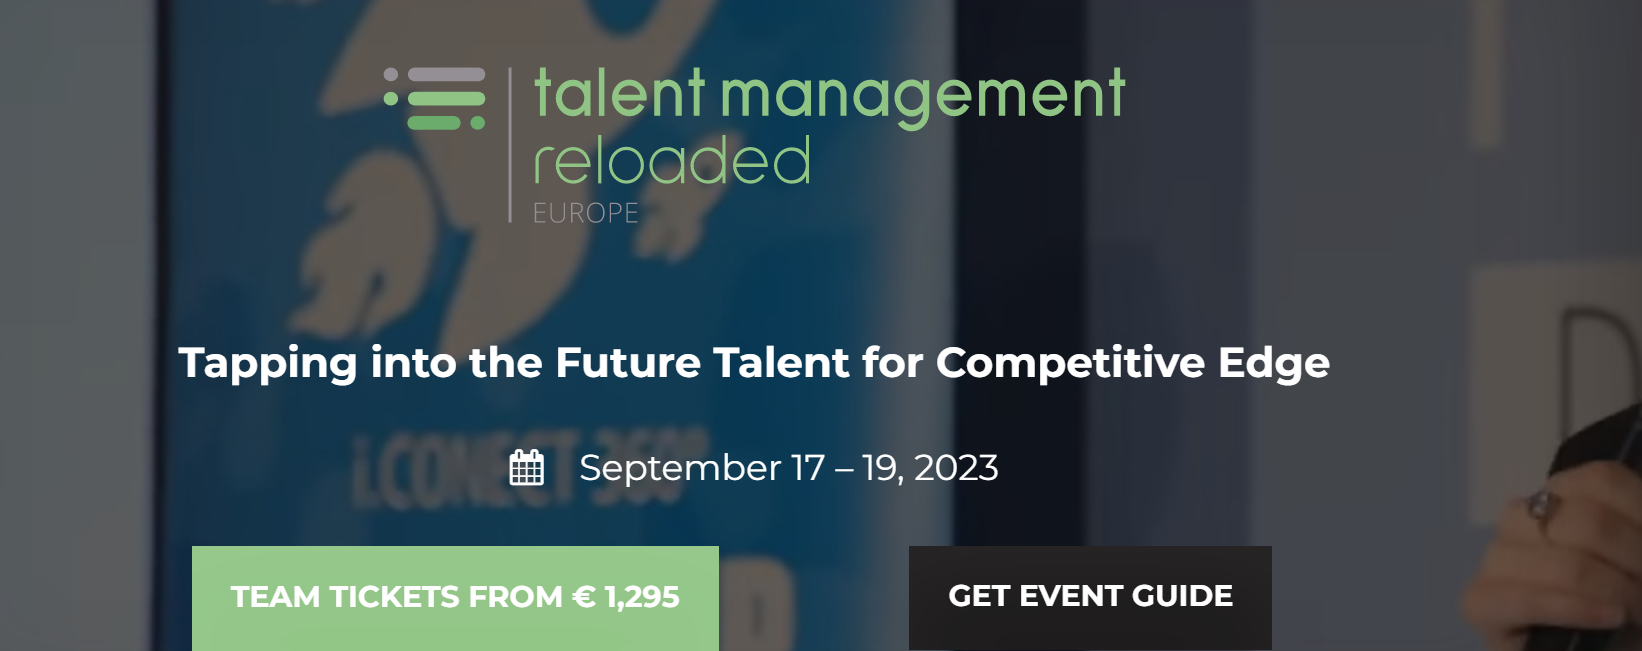 Talent Management Reloaded Europe HR event